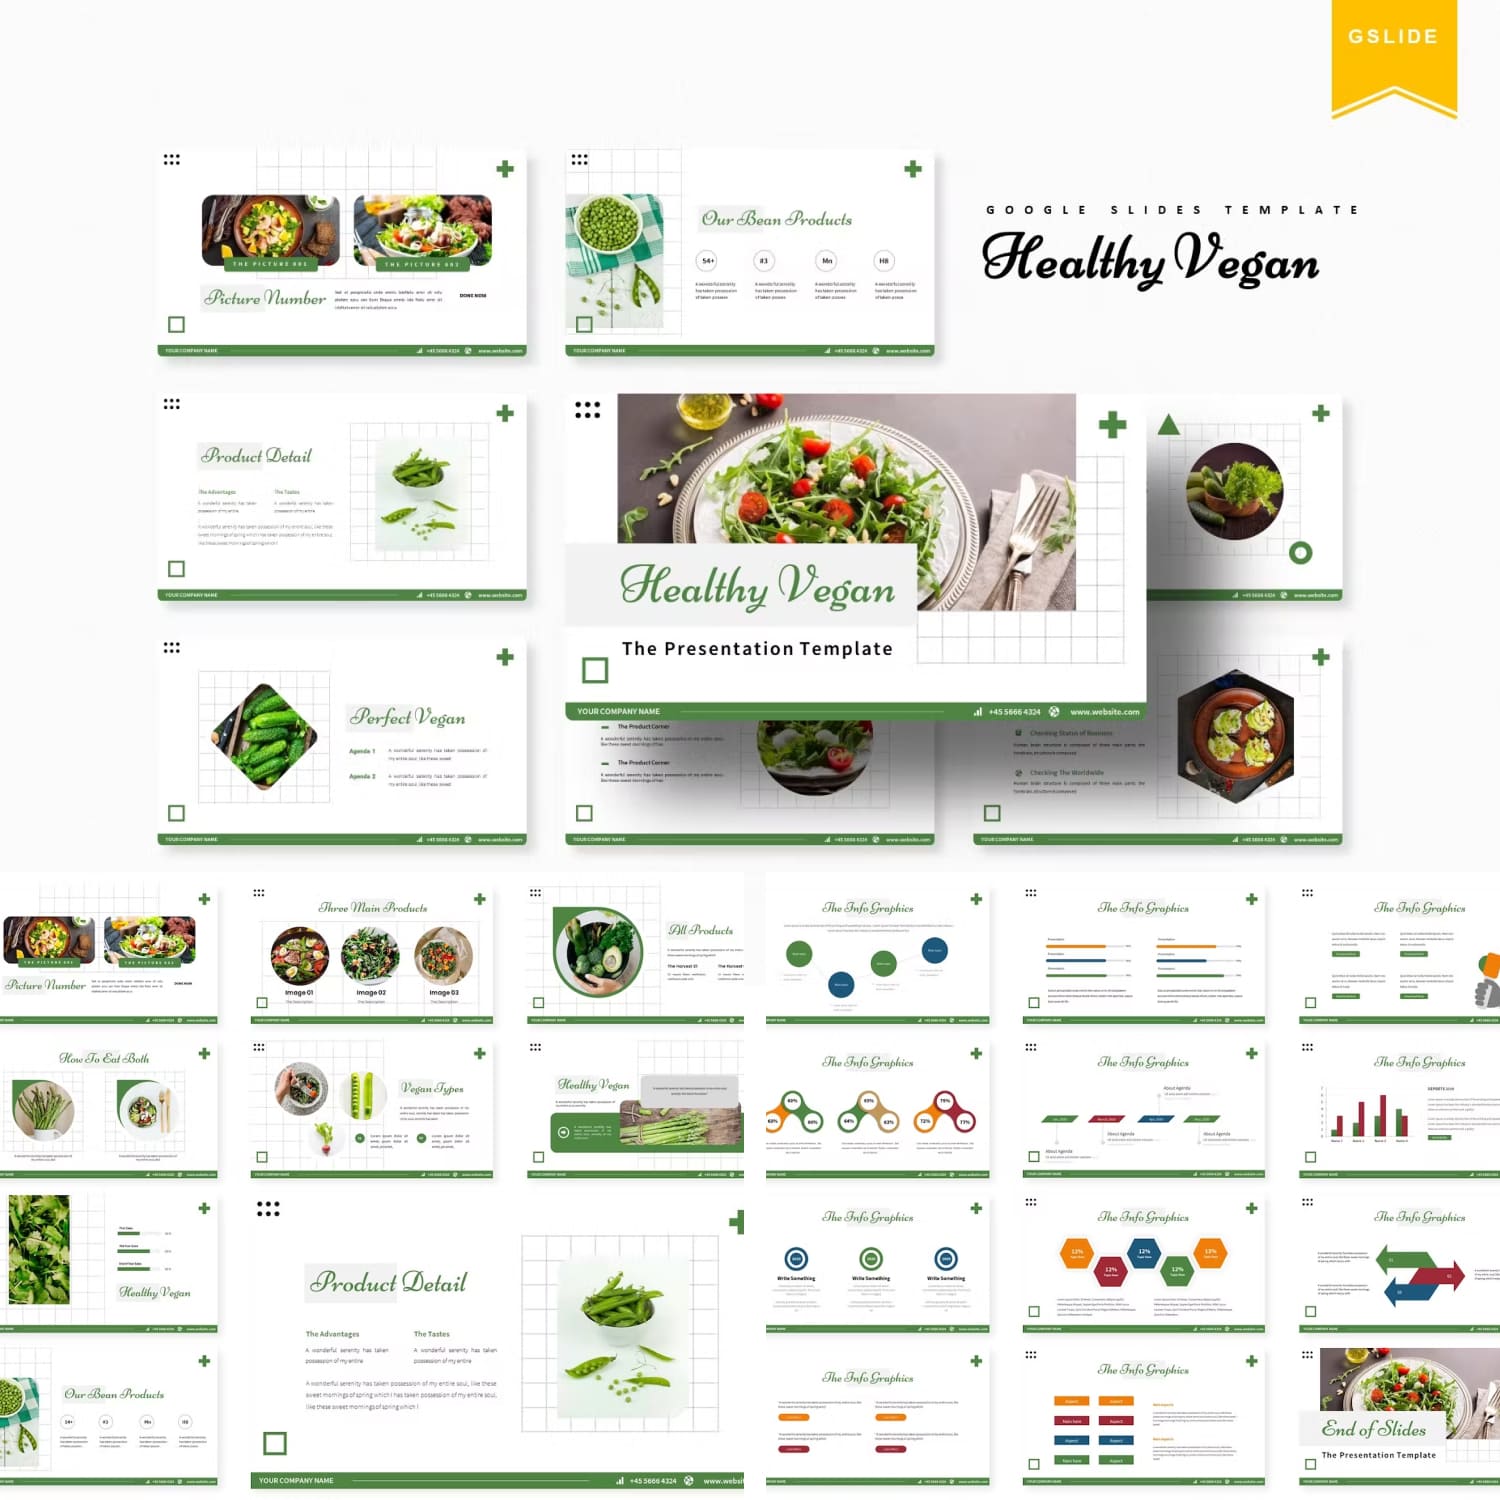 Vegan Template Slide Image Prints.